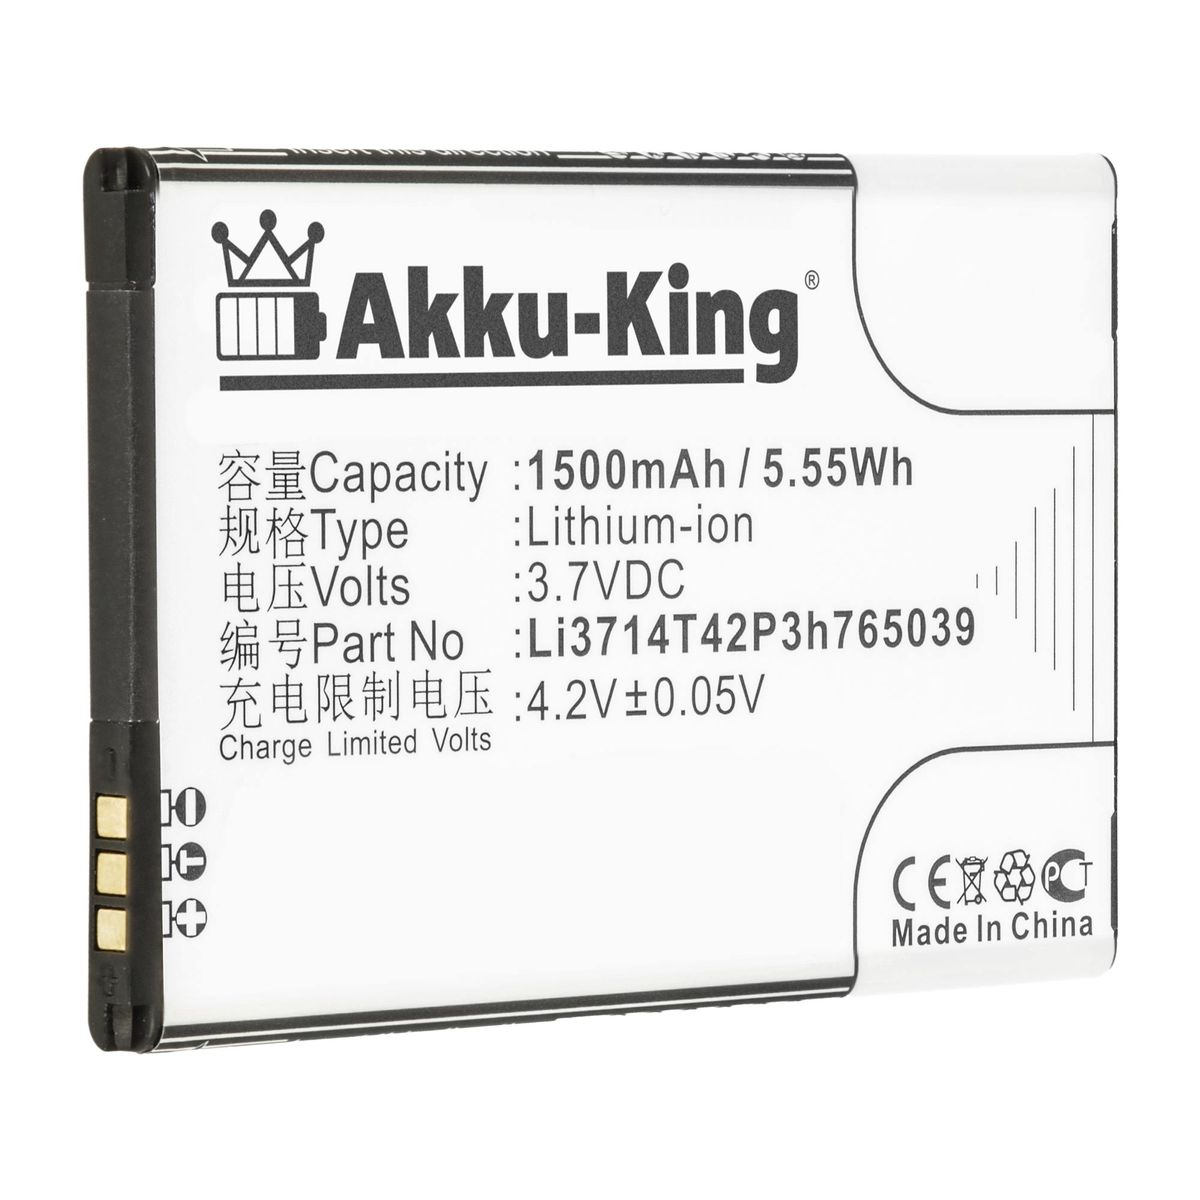 AKKU-KING Akku Li-Ion Handy-Akku, 1500mAh 3.7 mit Li3714T42P3h765039 ZTE Volt, kompatibel